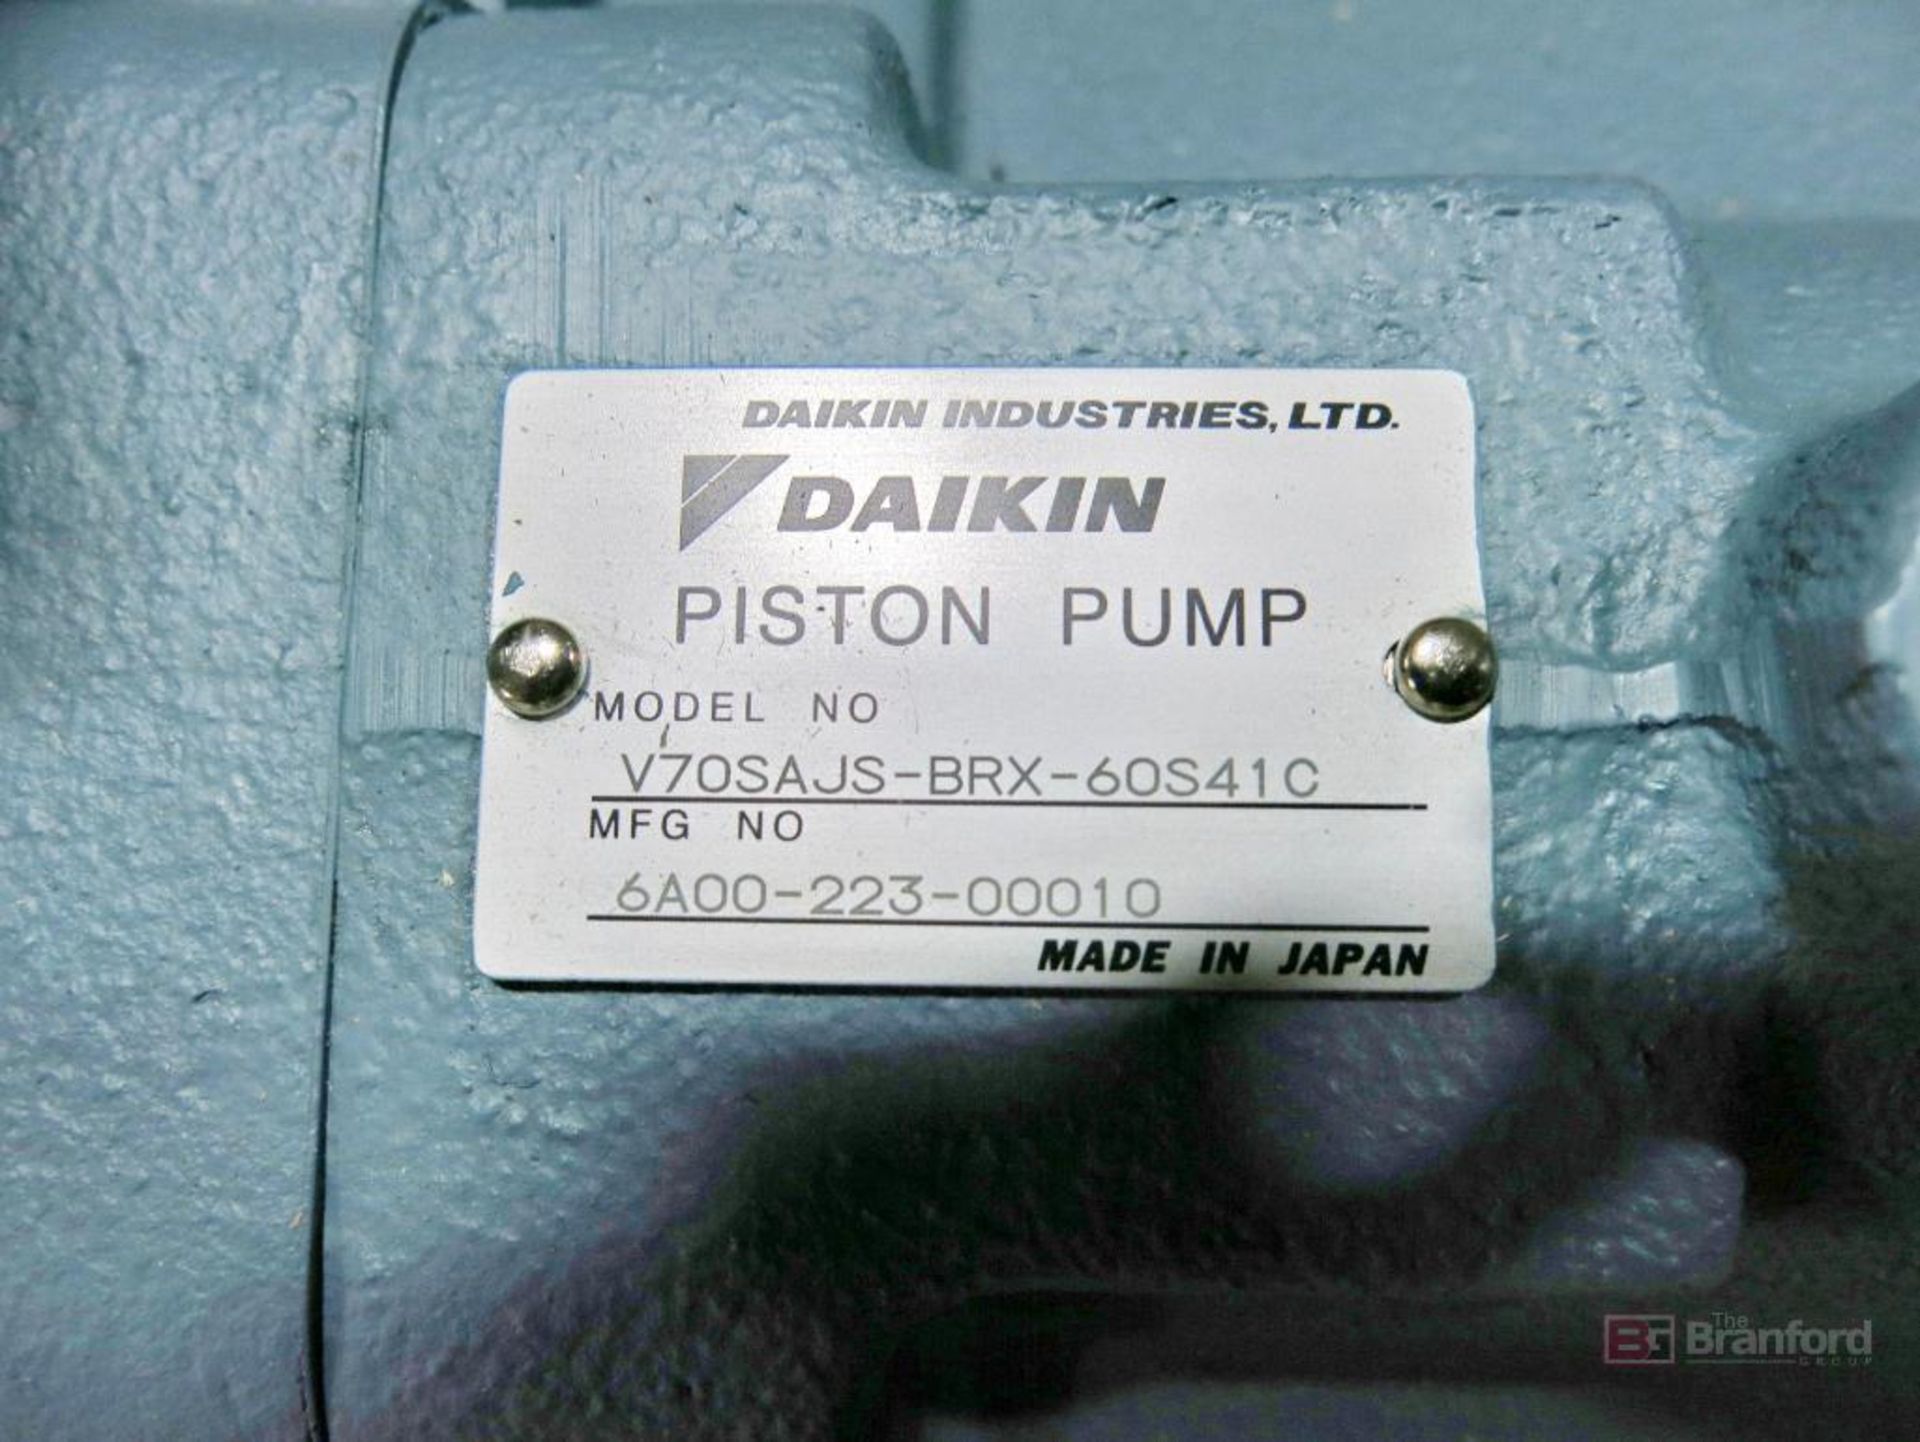 Daikin Model V70SAJS-BRX-60S41C Hydraulic Pump - Image 2 of 2